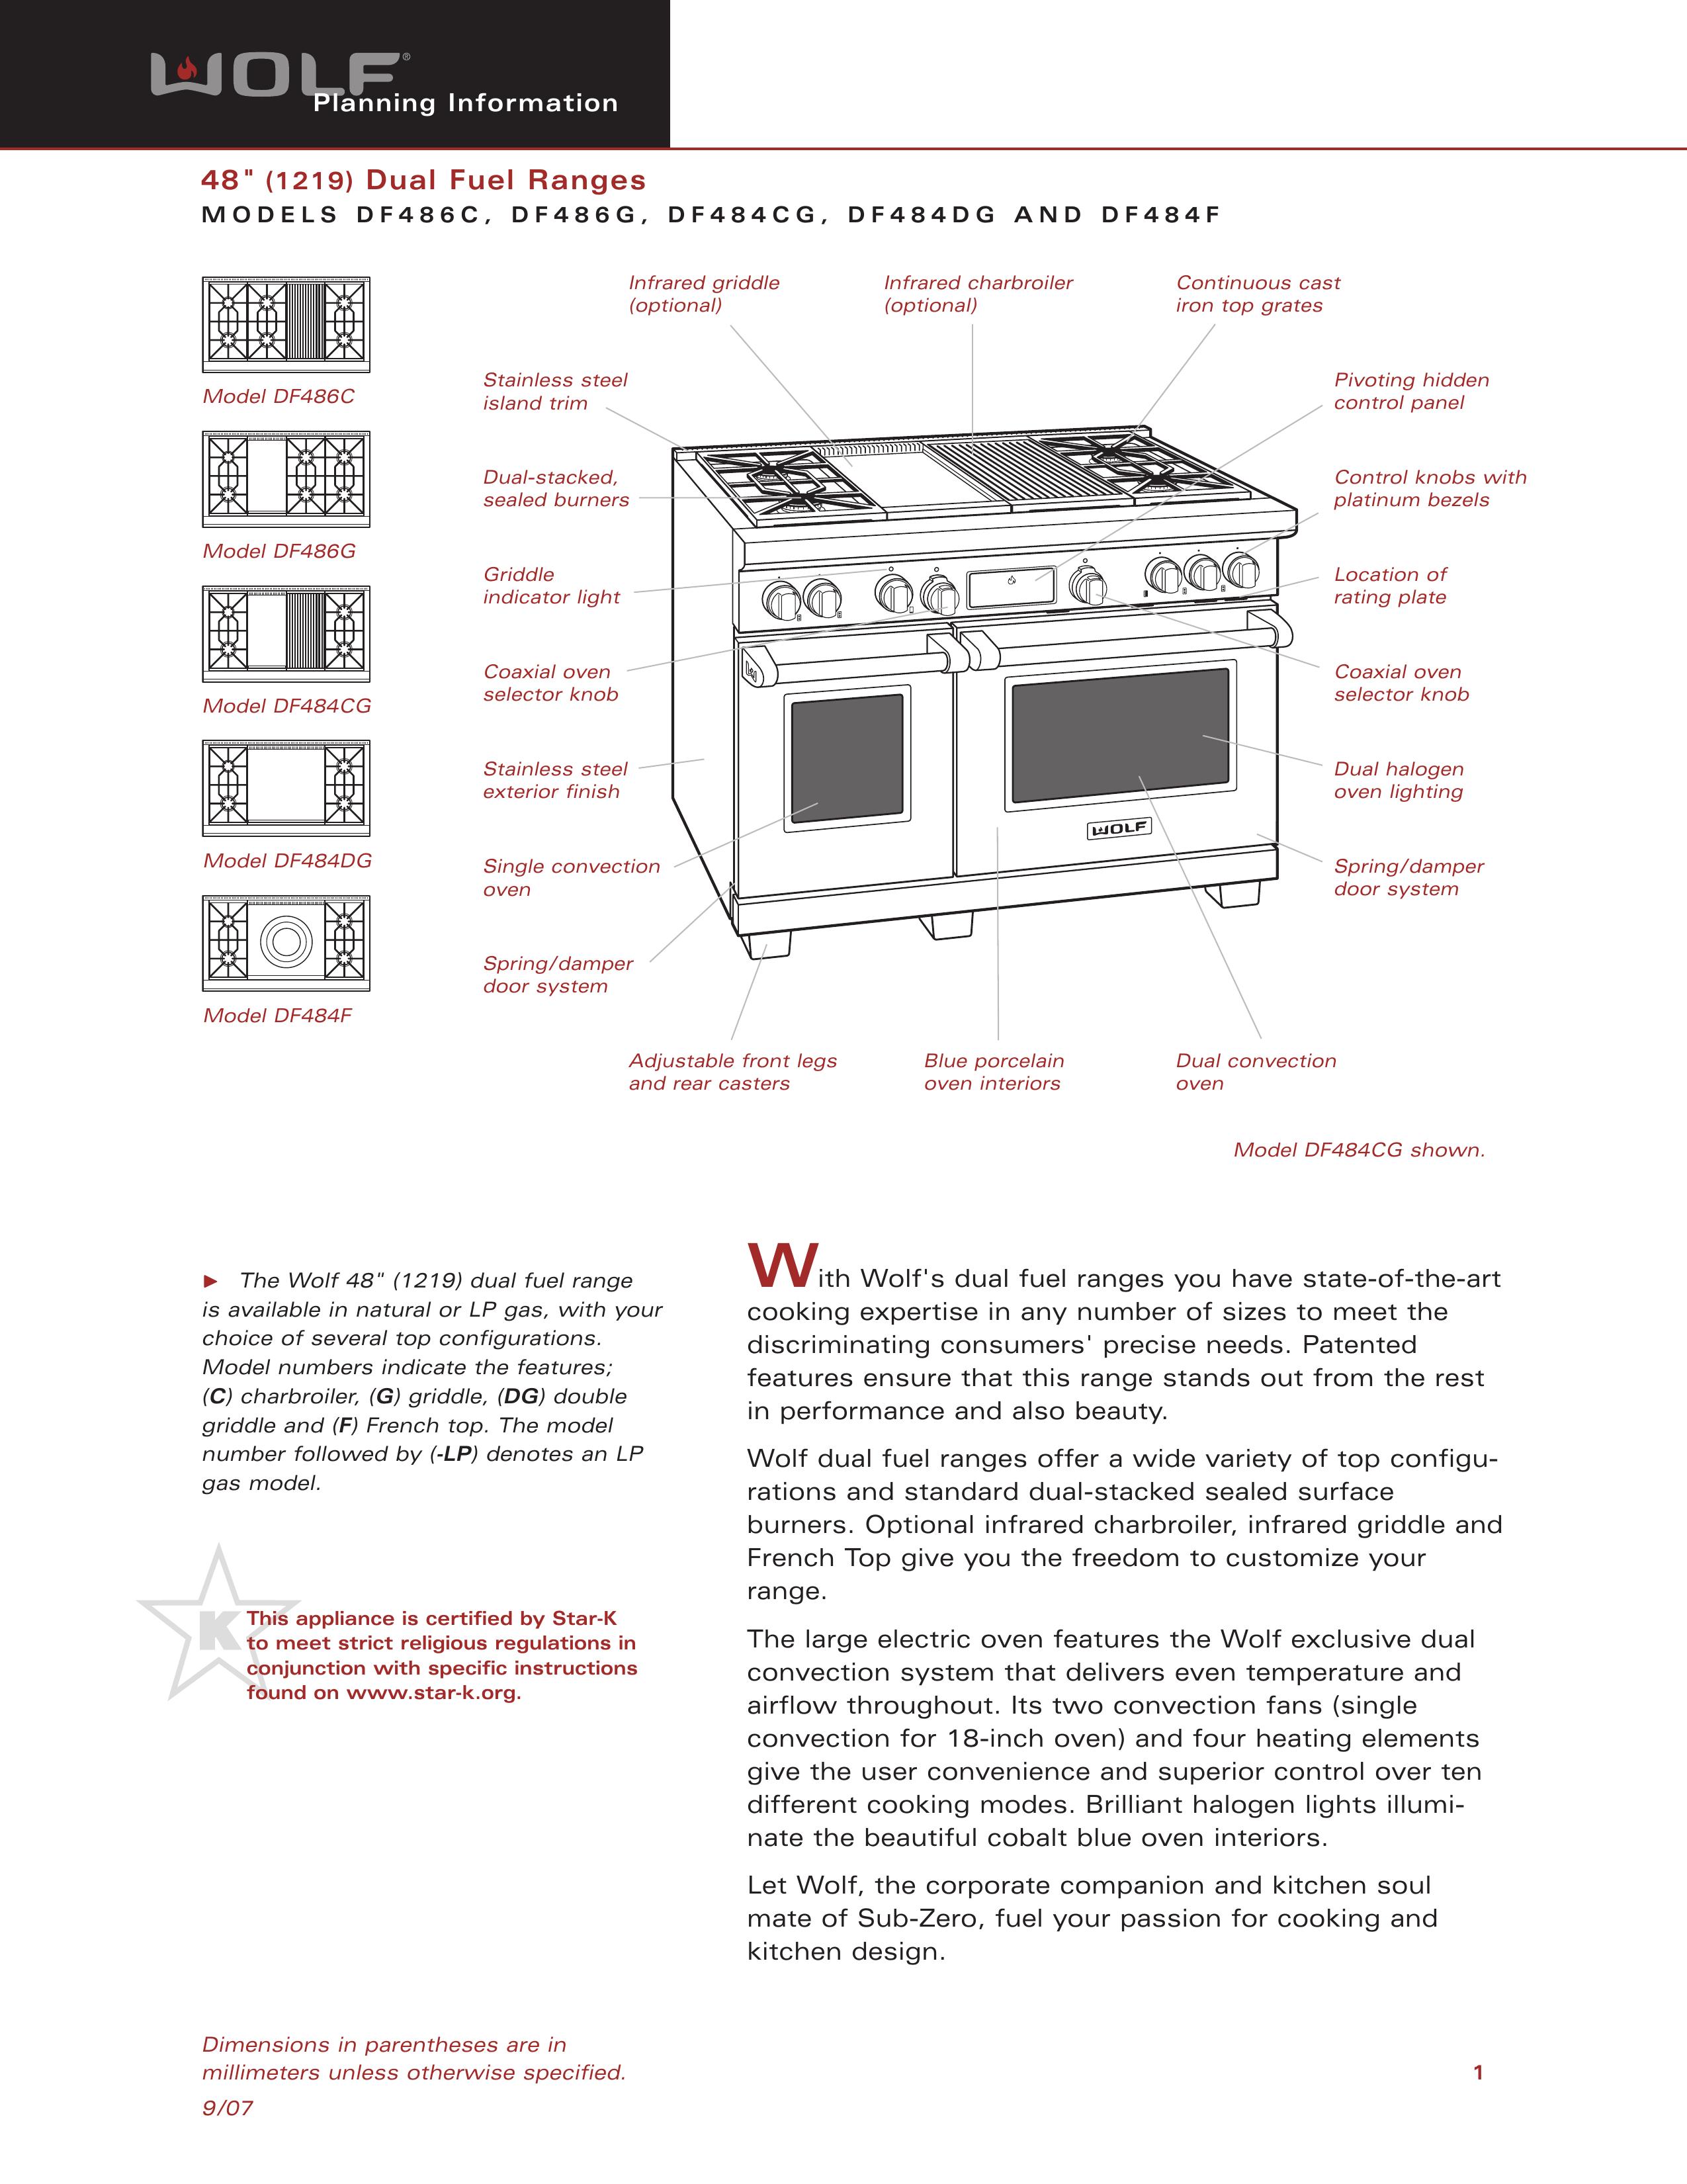 Wolf Appliance Company DF484F Range User Manual